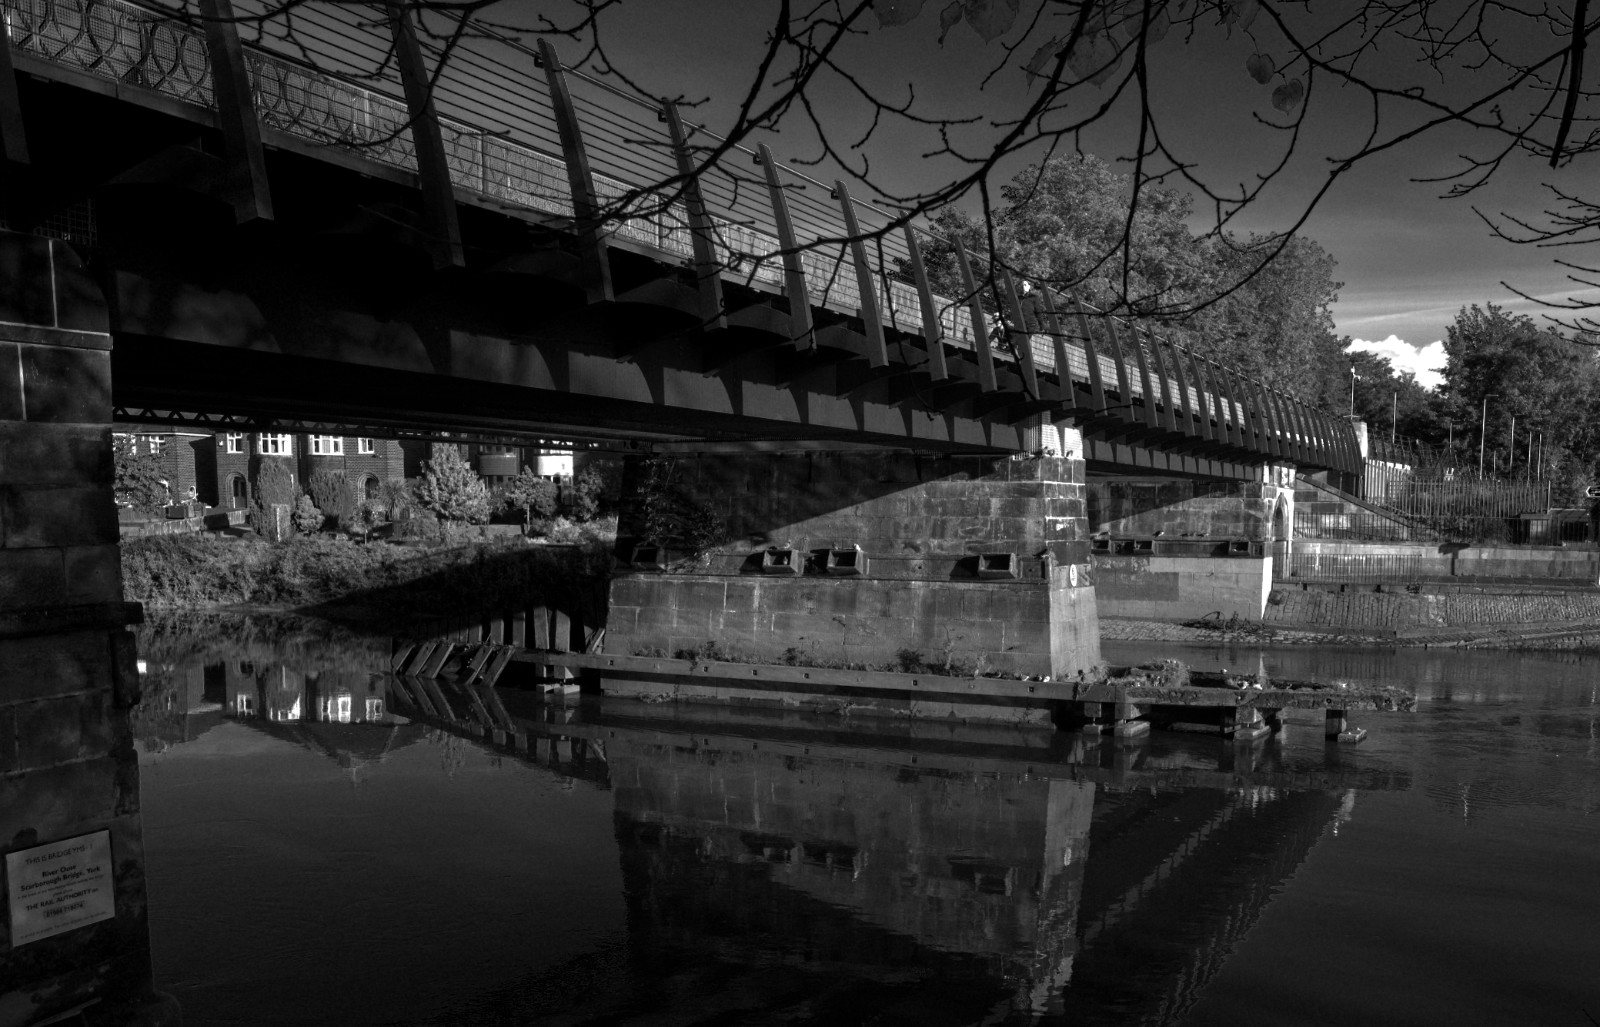 A bridge with a view, York,Phil Neath